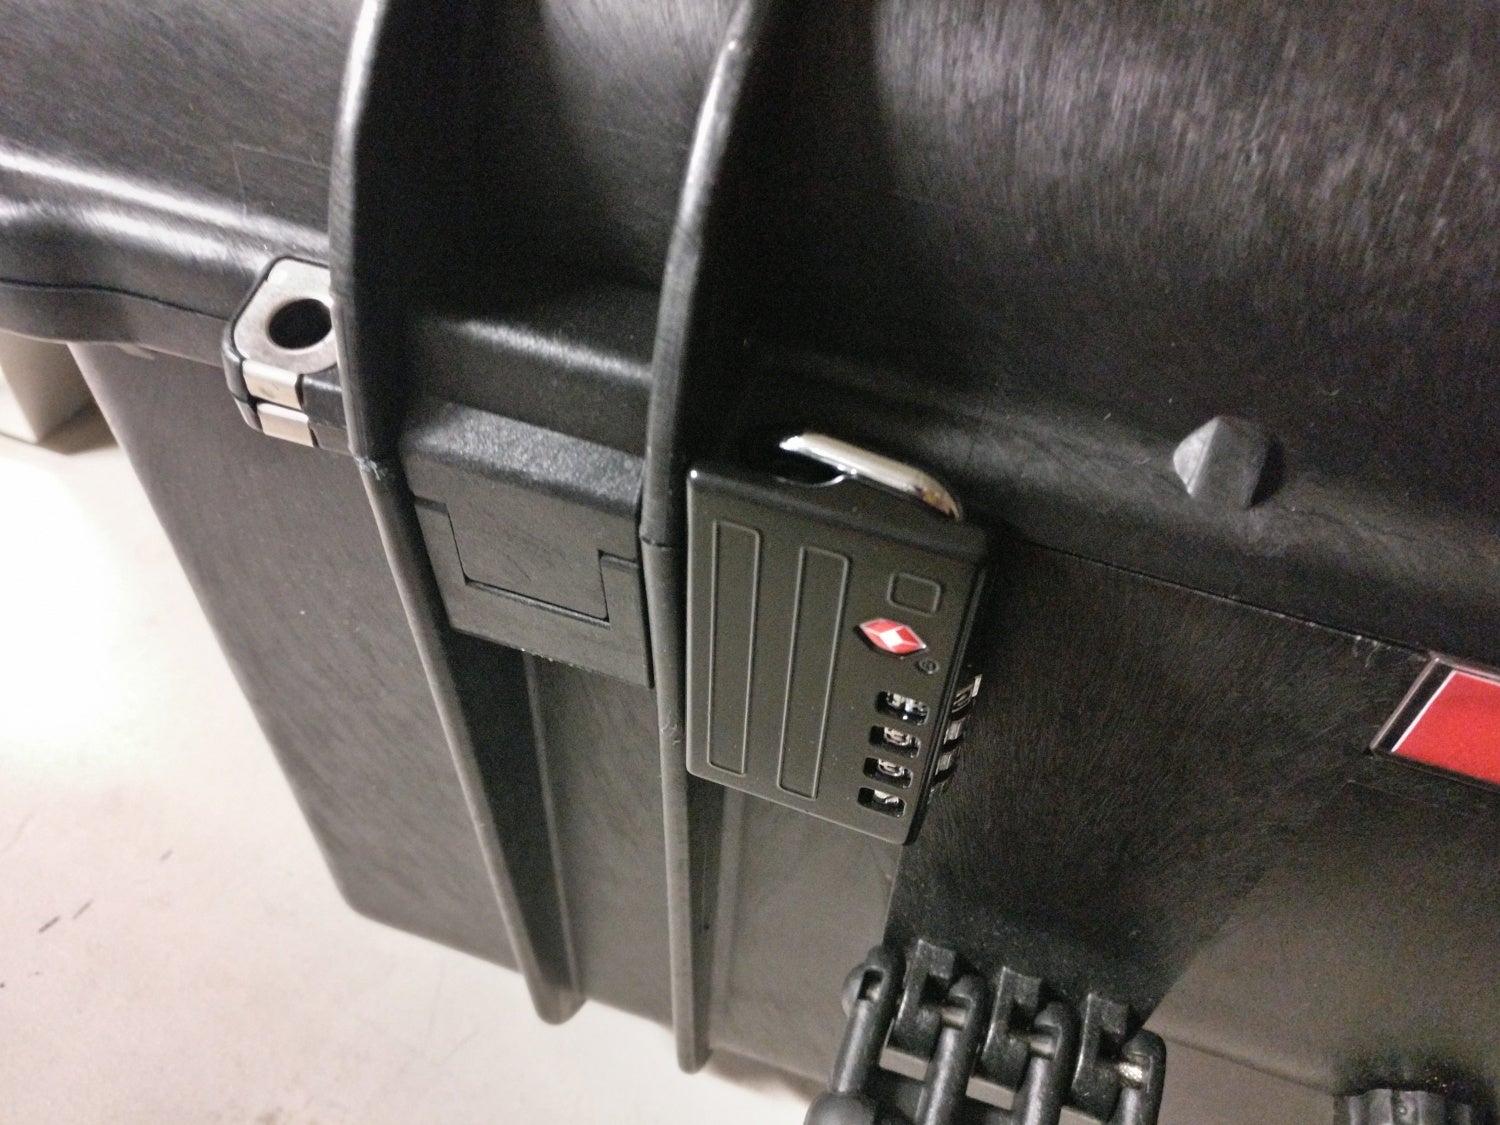 TSA compatible padlock affixed to a hasp